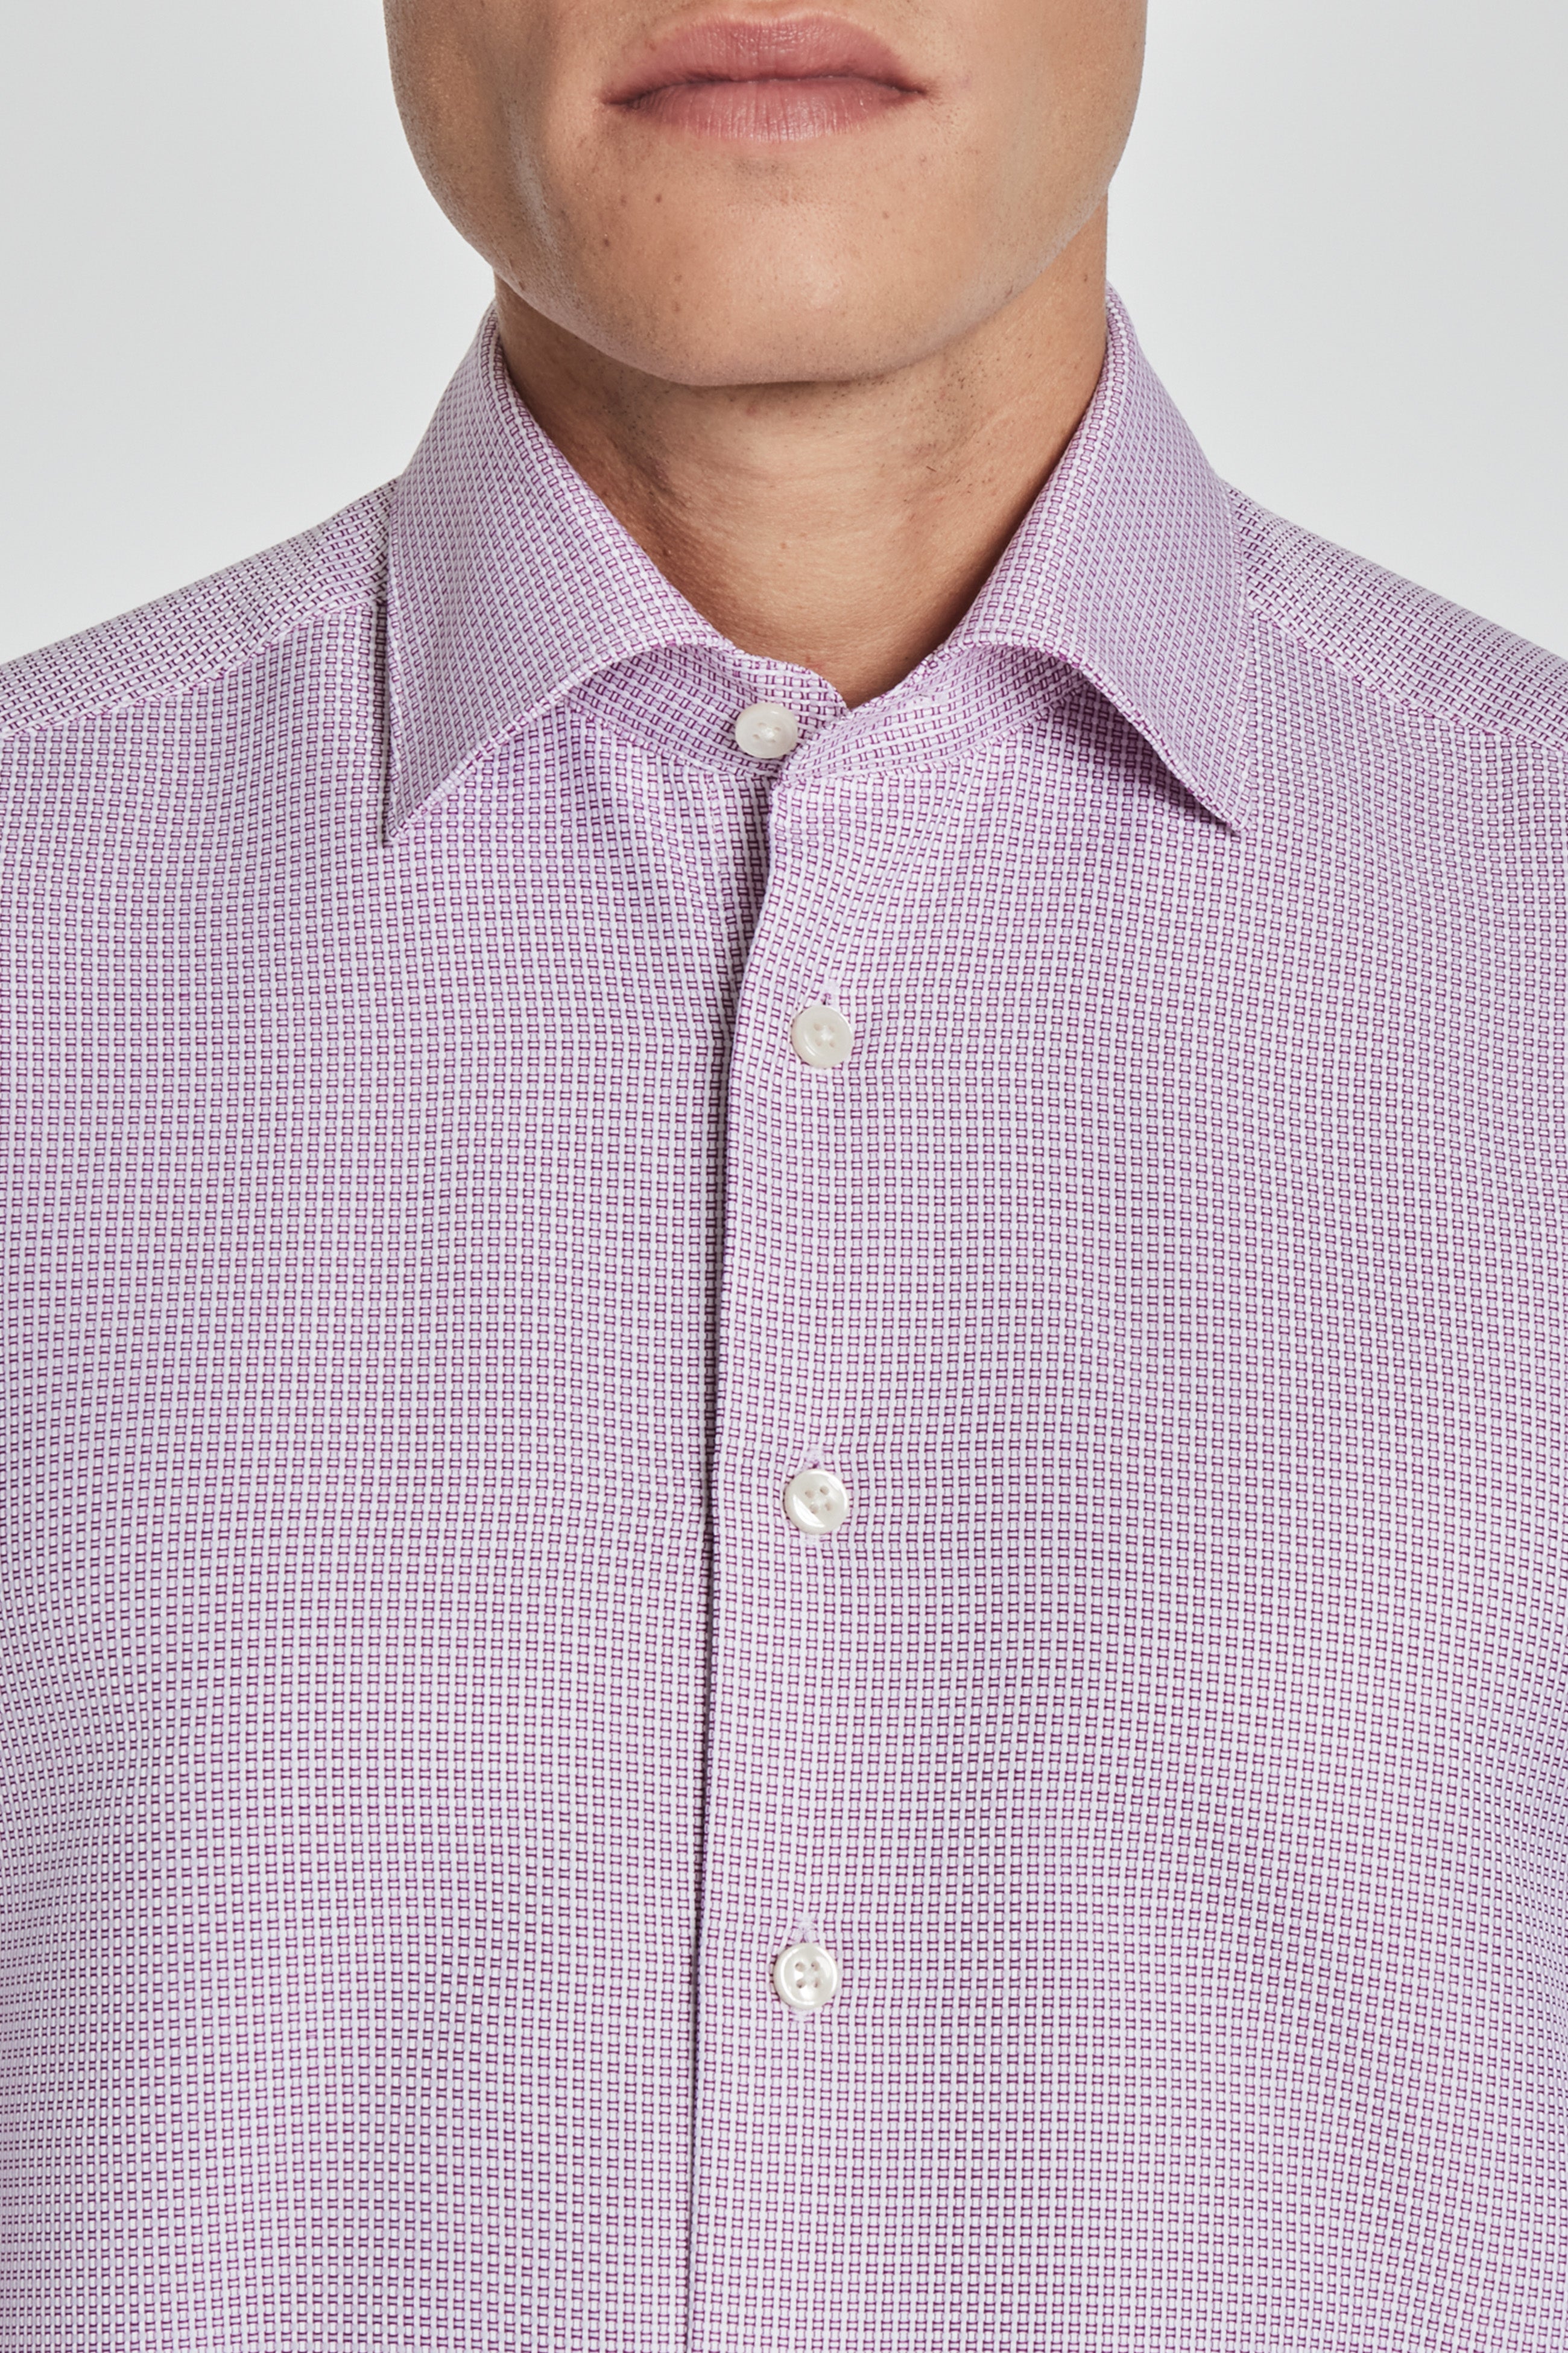 Alt view 1 Geometric Weave Cotton Dress Shirt in Purple